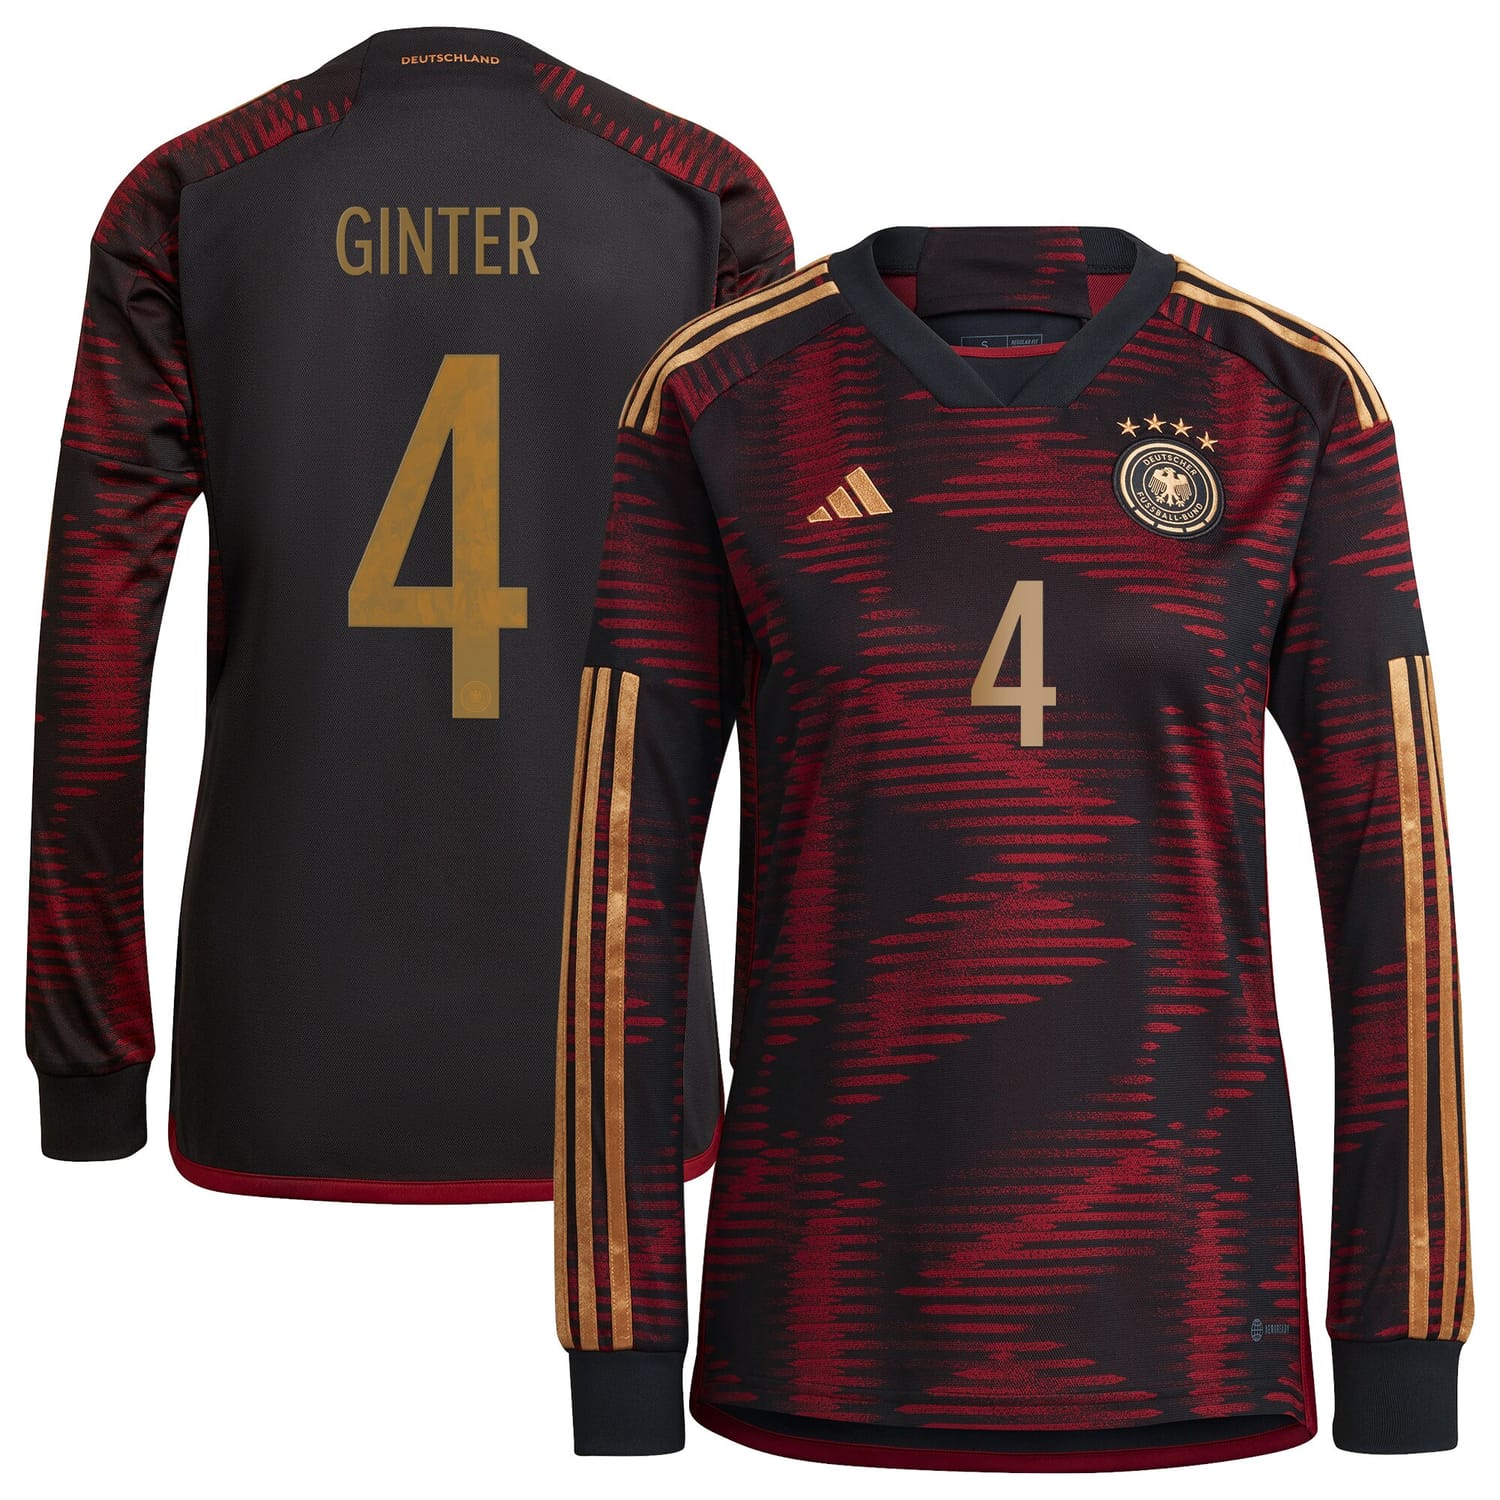 Germany National Team Away Jersey Shirt Long Sleeve player Matthias Ginter 4 printing for Women